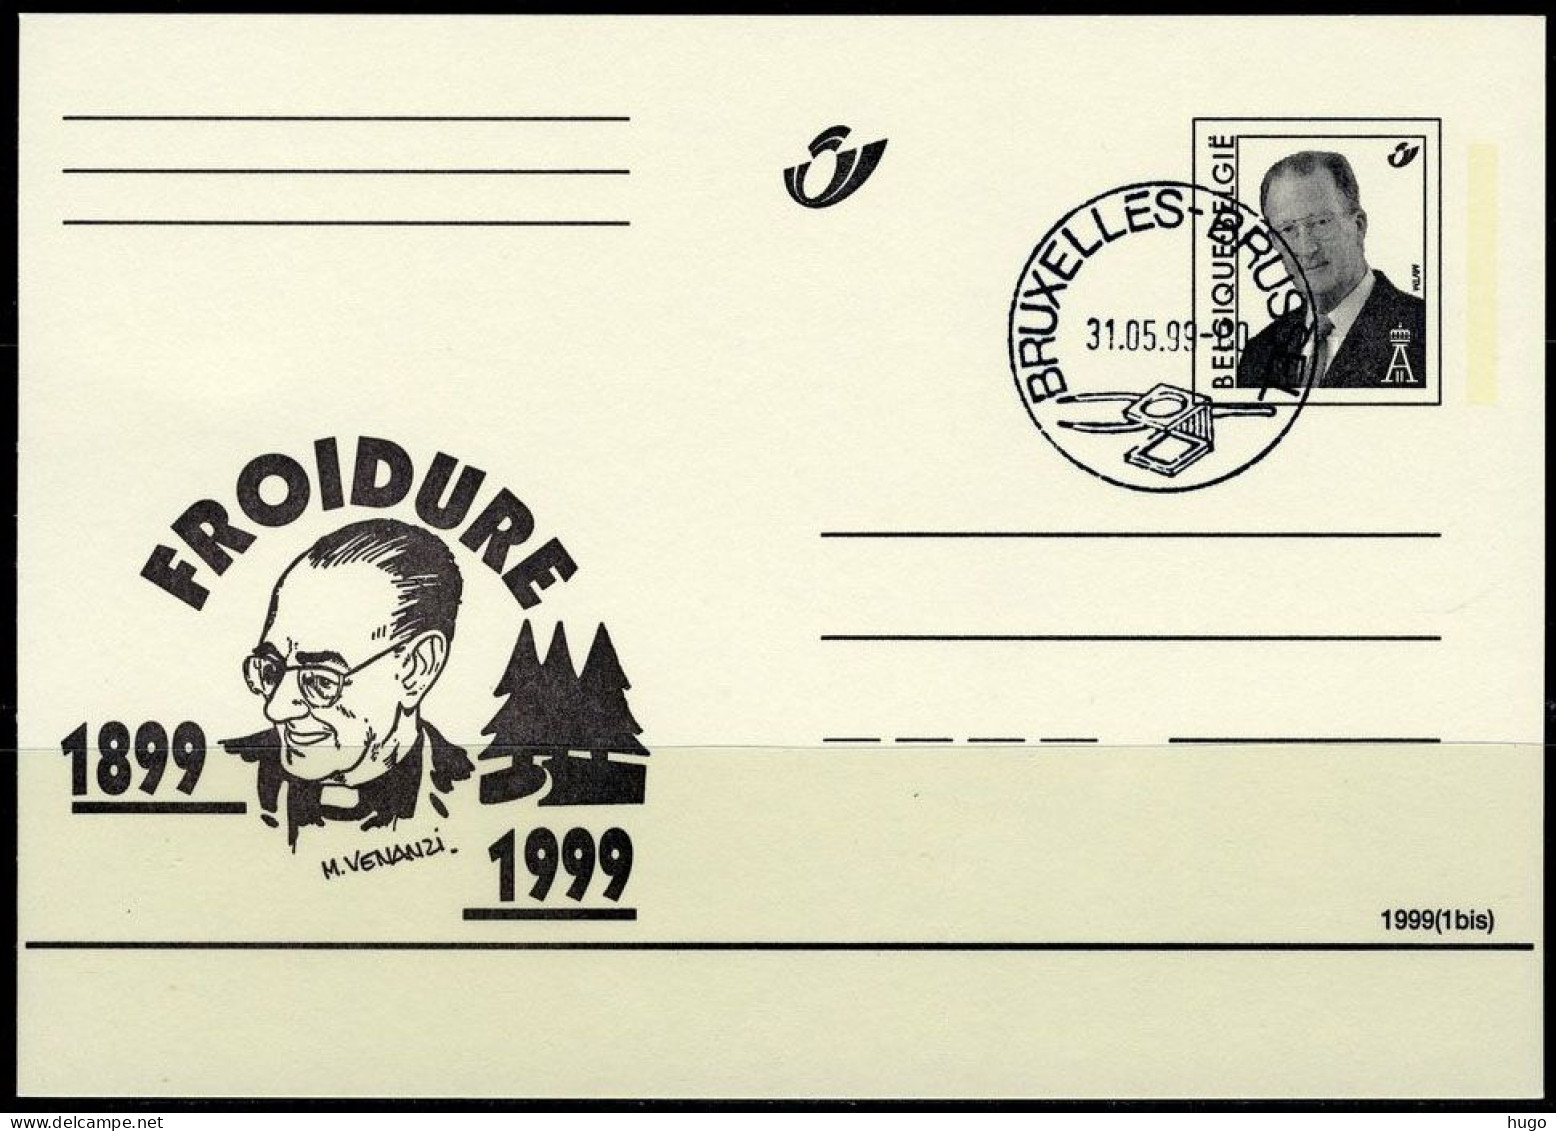 (B) België Briefkaart FDC  1999(1bis) - FROIDURE 1899-199 - Cartes Postales Illustrées (1971-2014) [BK]